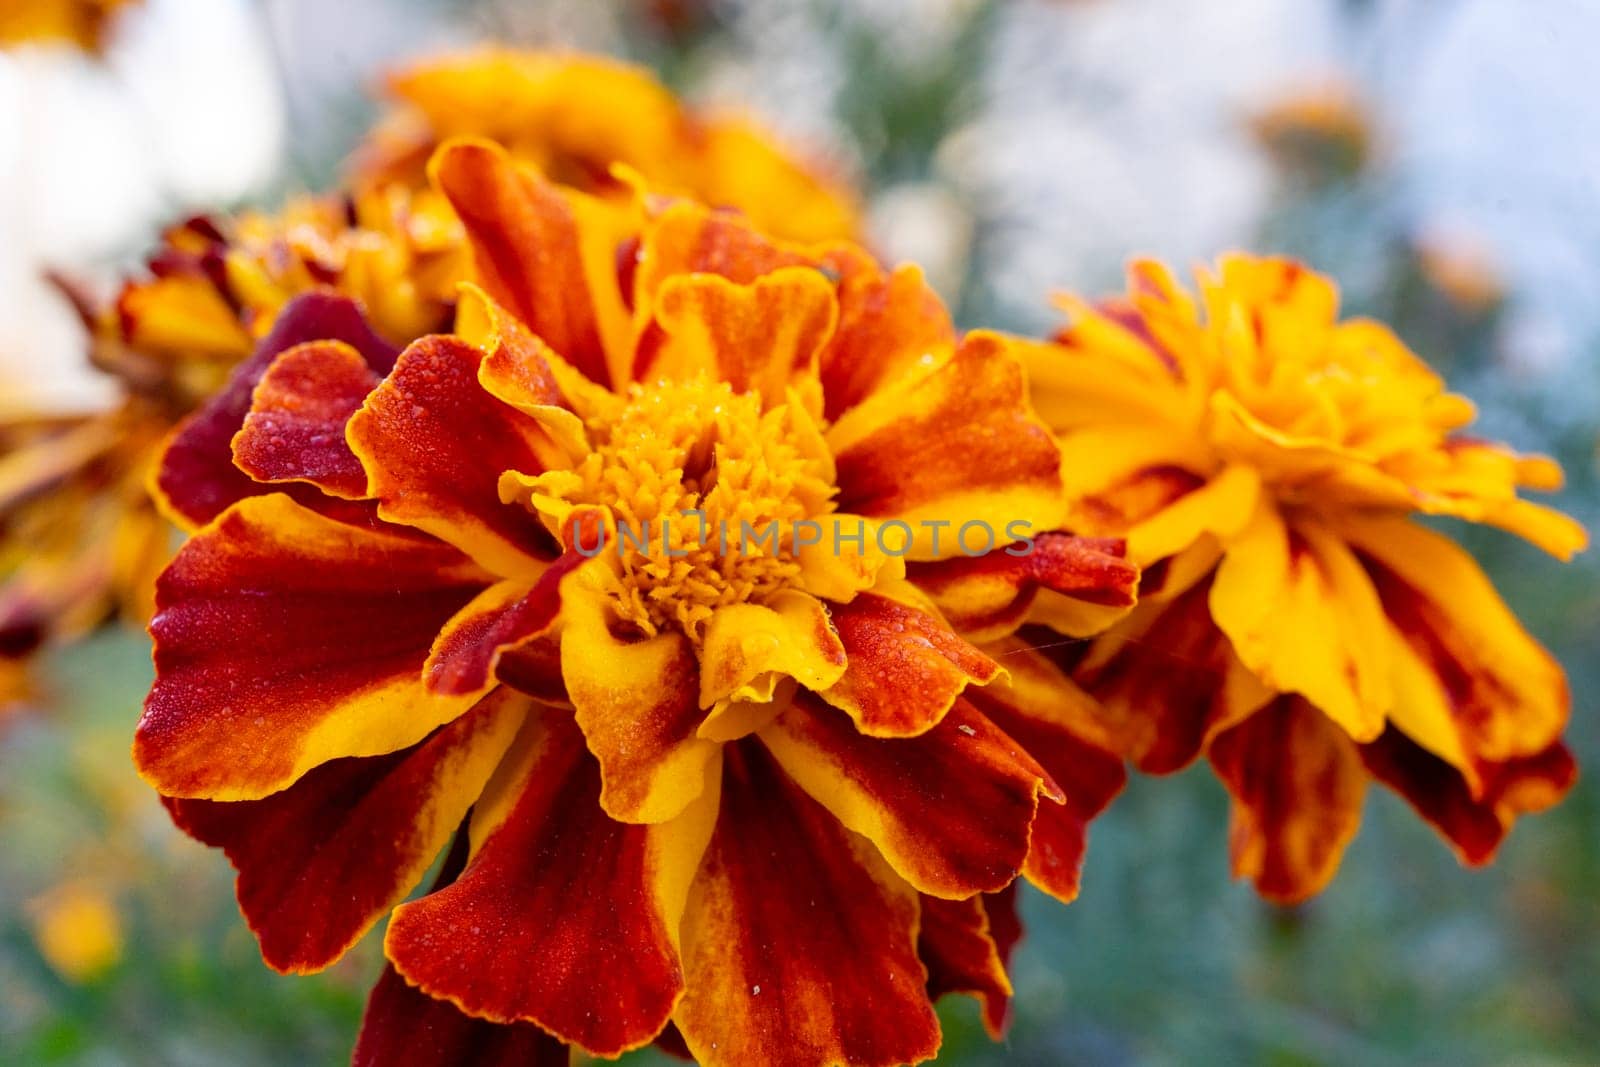 Two large marigolds on a blurred background by Serhii_Voroshchuk